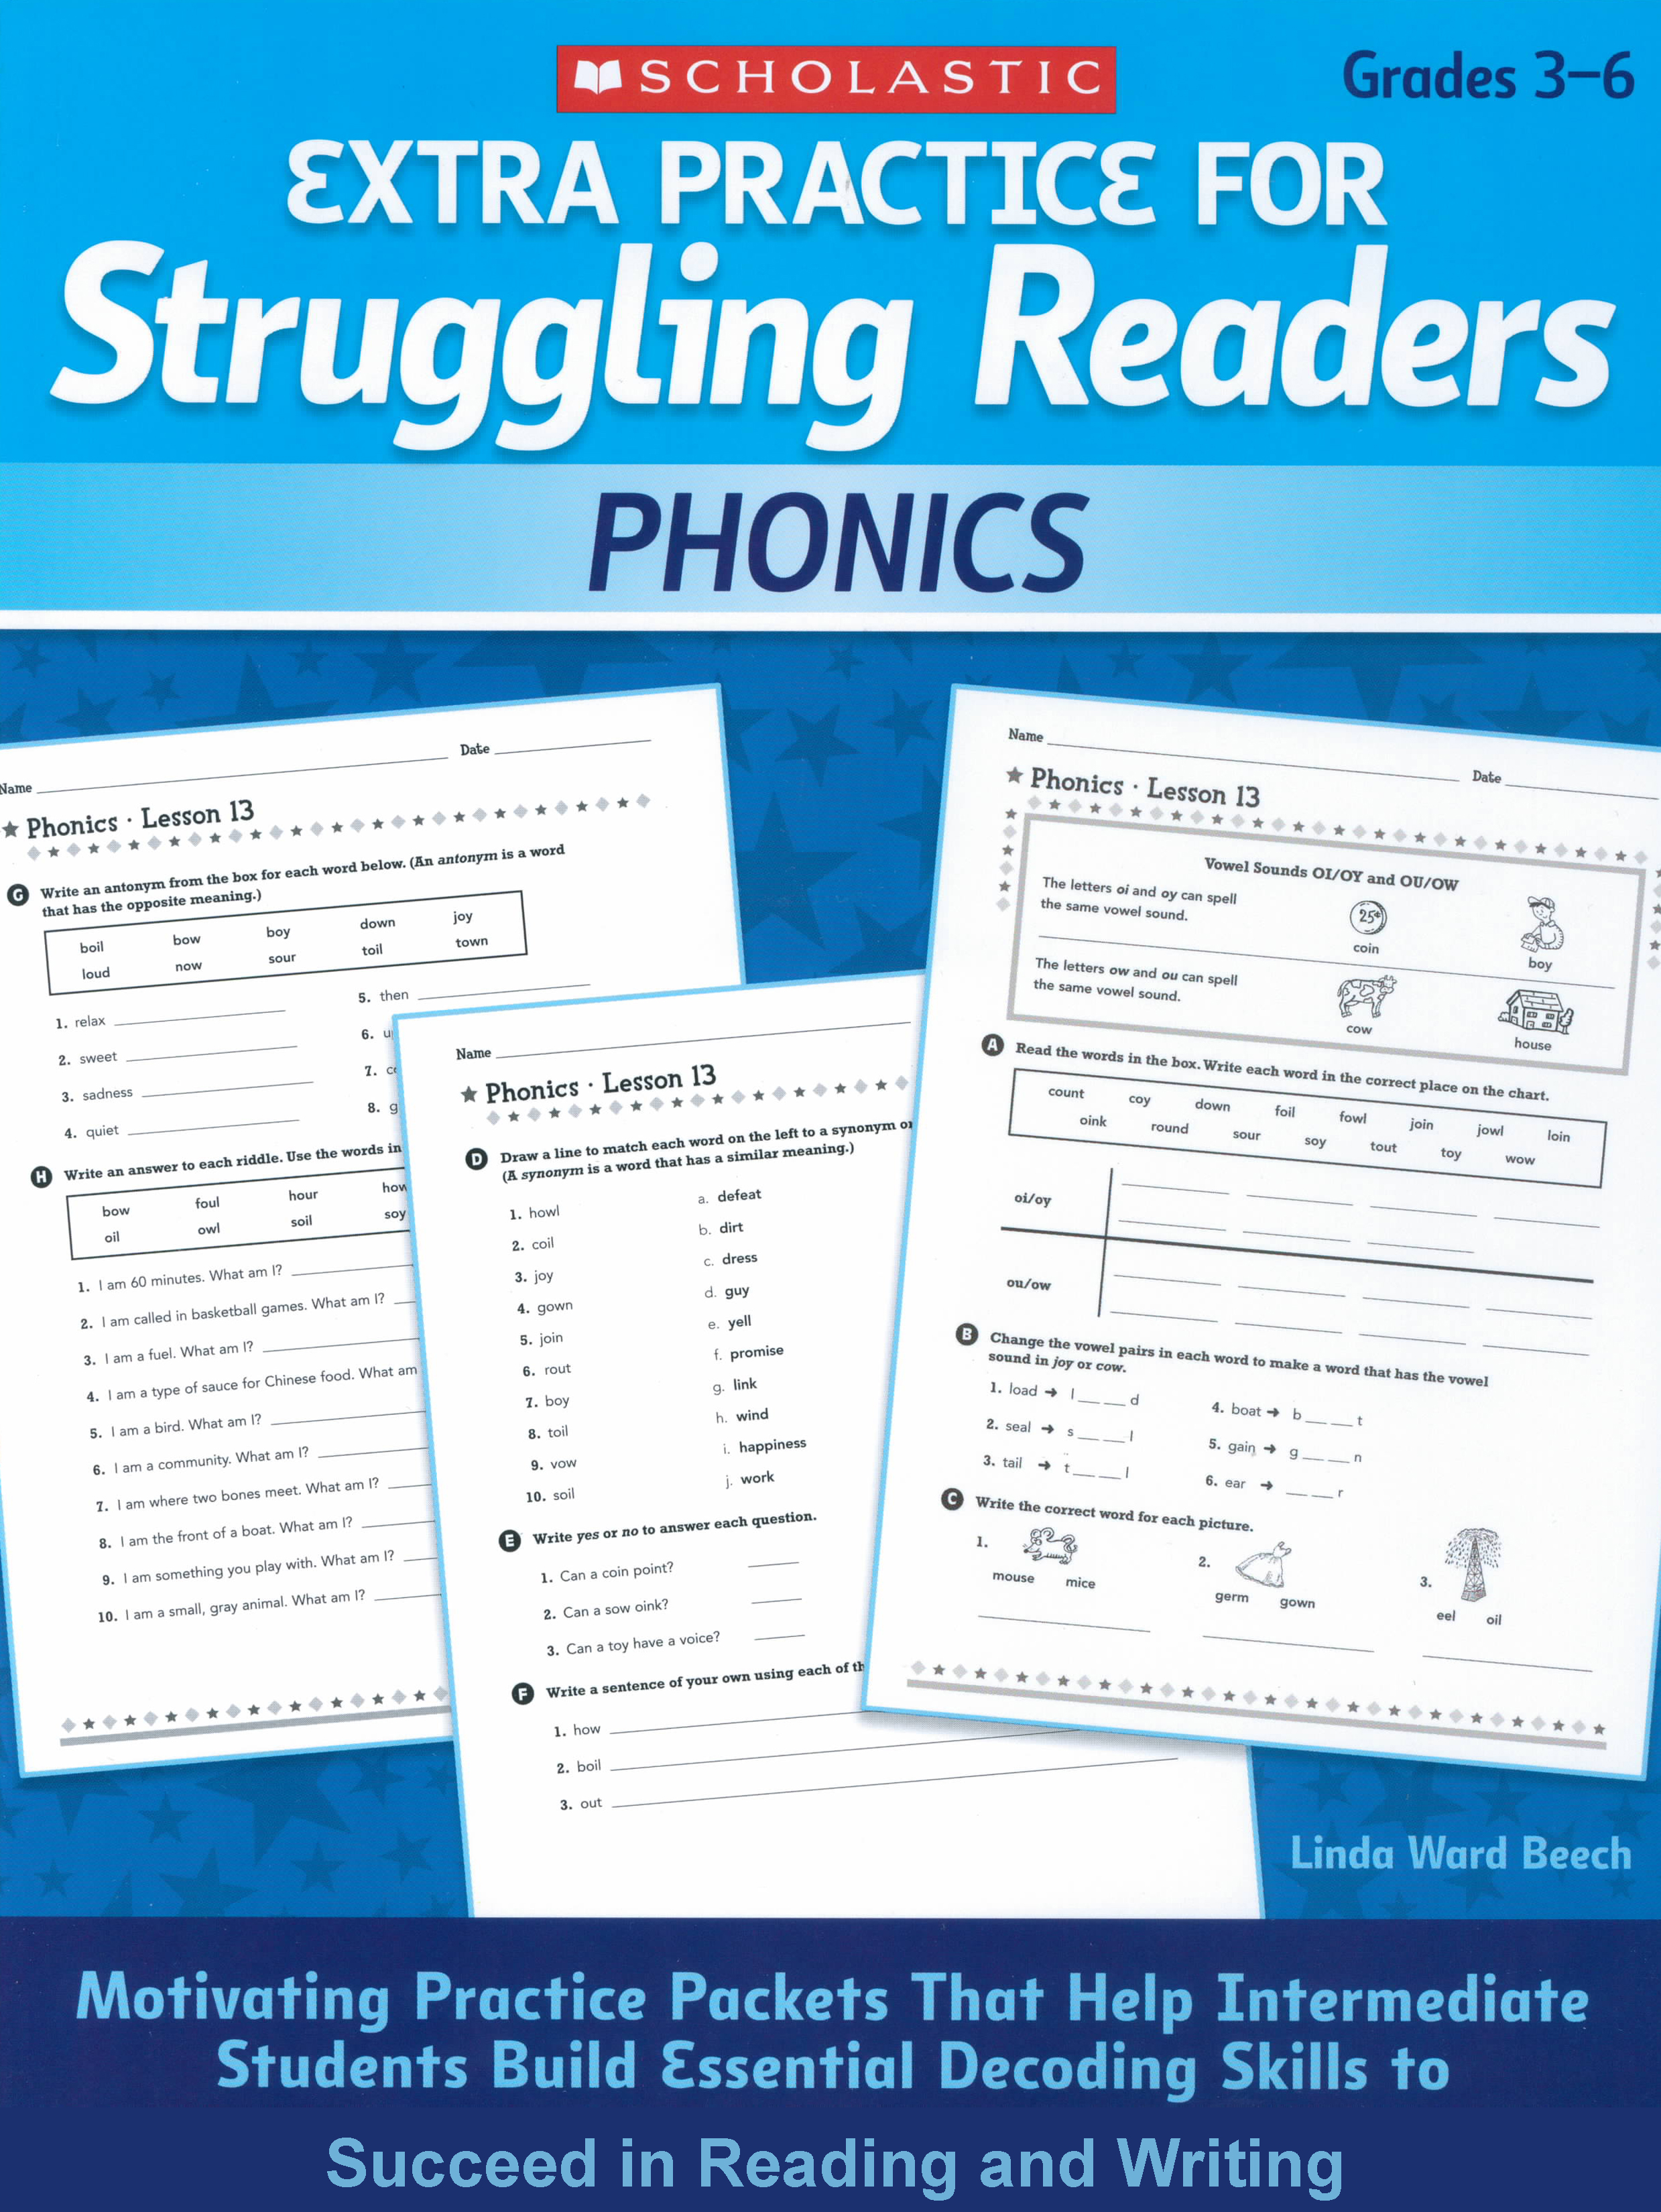 Phonics Grades 3-6 ("Extra Practice) by Linda Ward Beech 108-9780545124096